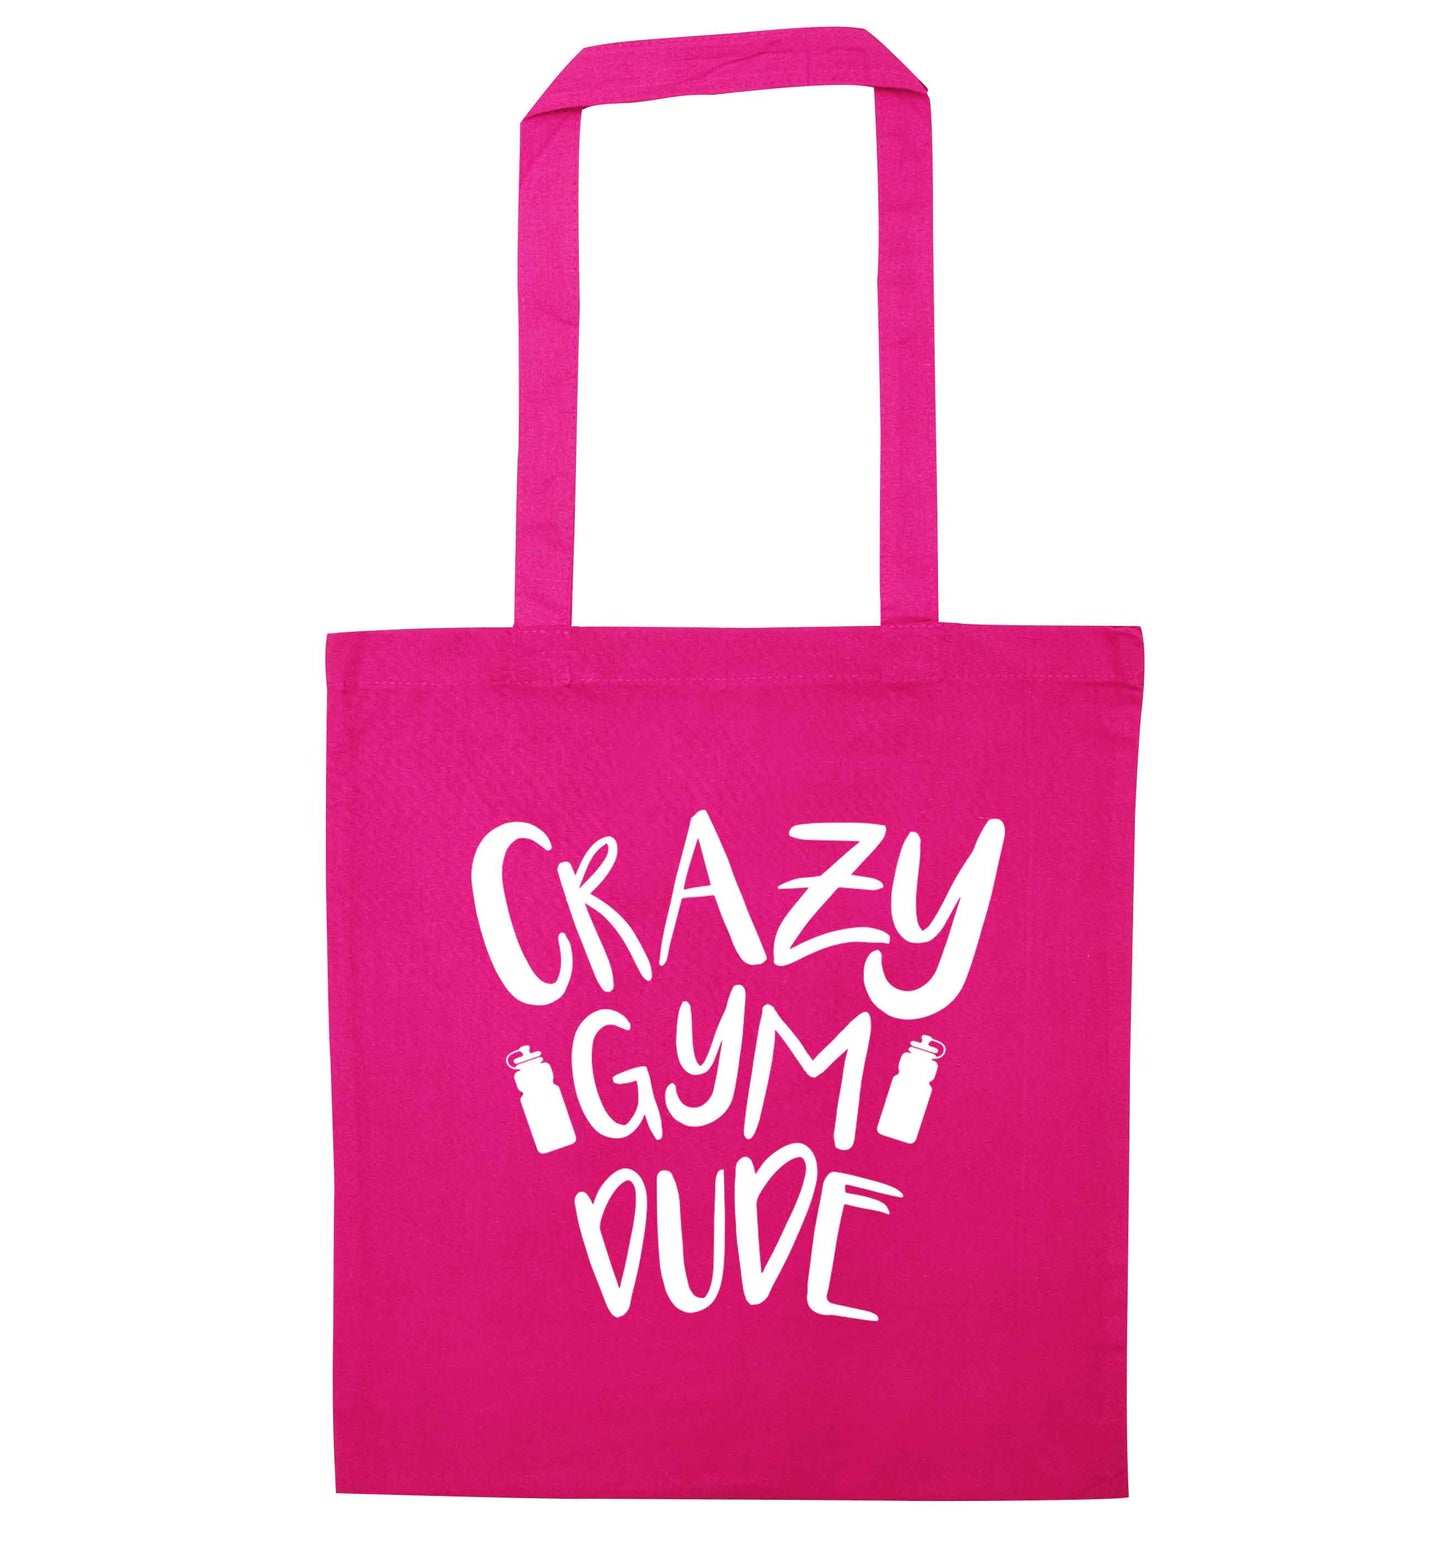 Crazy gym dude pink tote bag